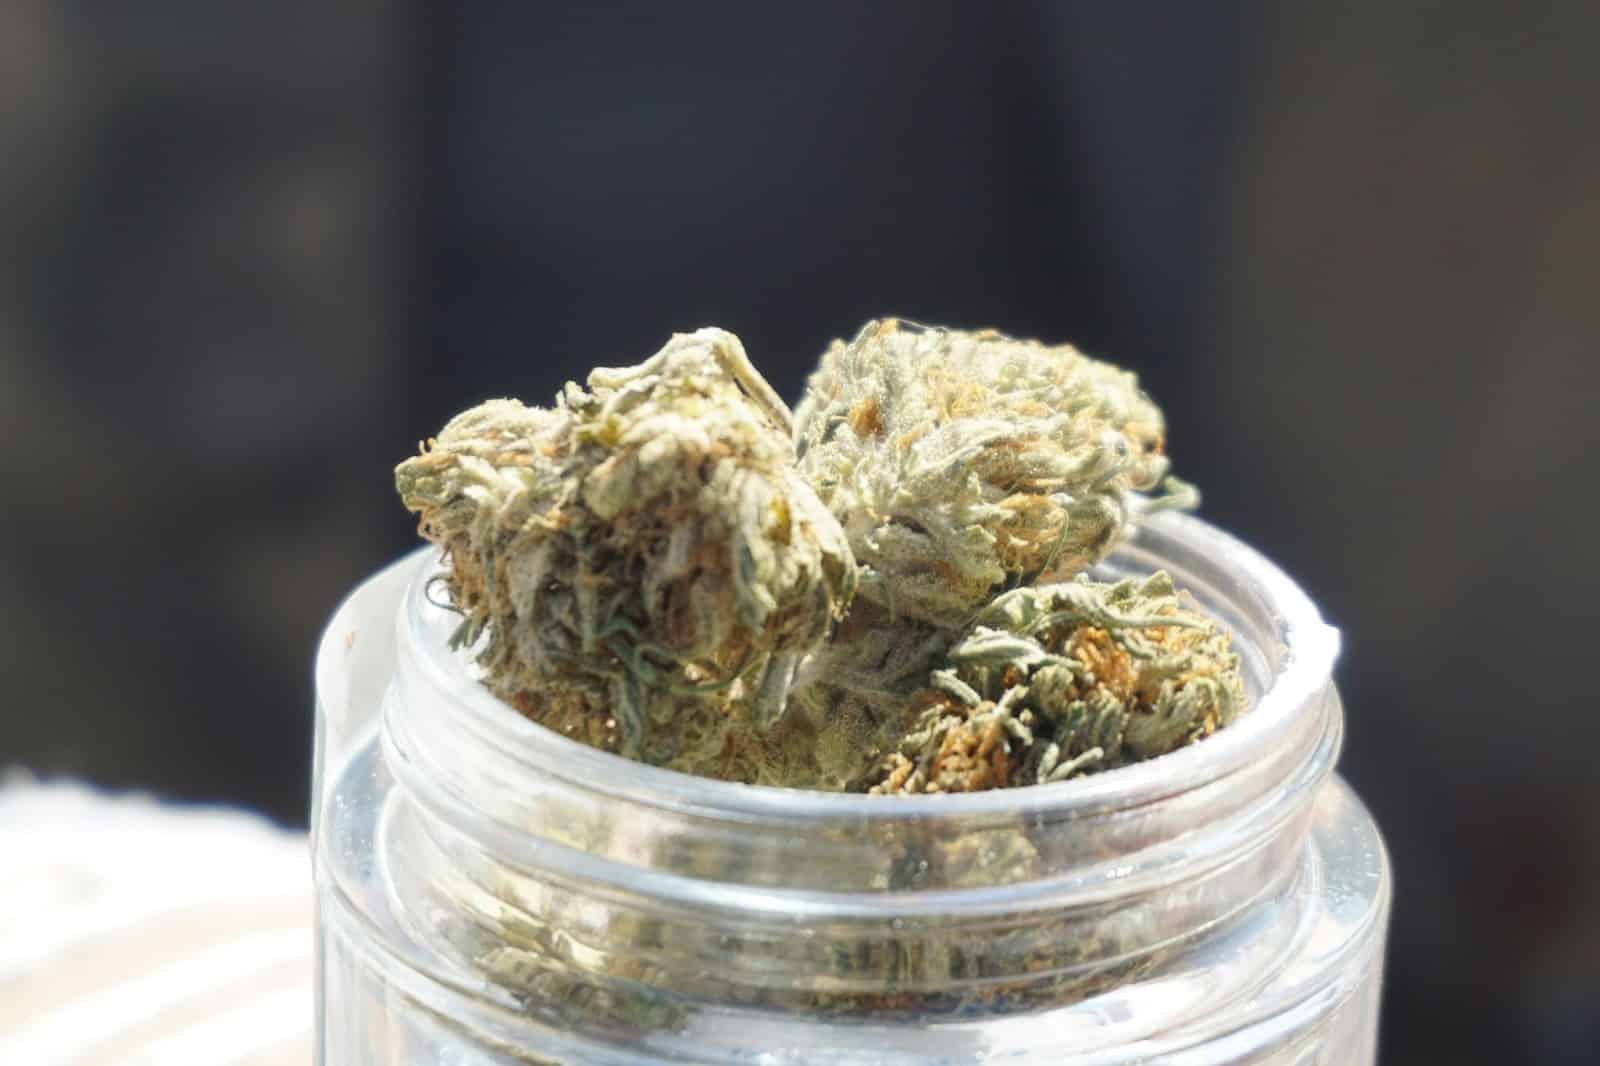 A glass jar of cannabis buds.